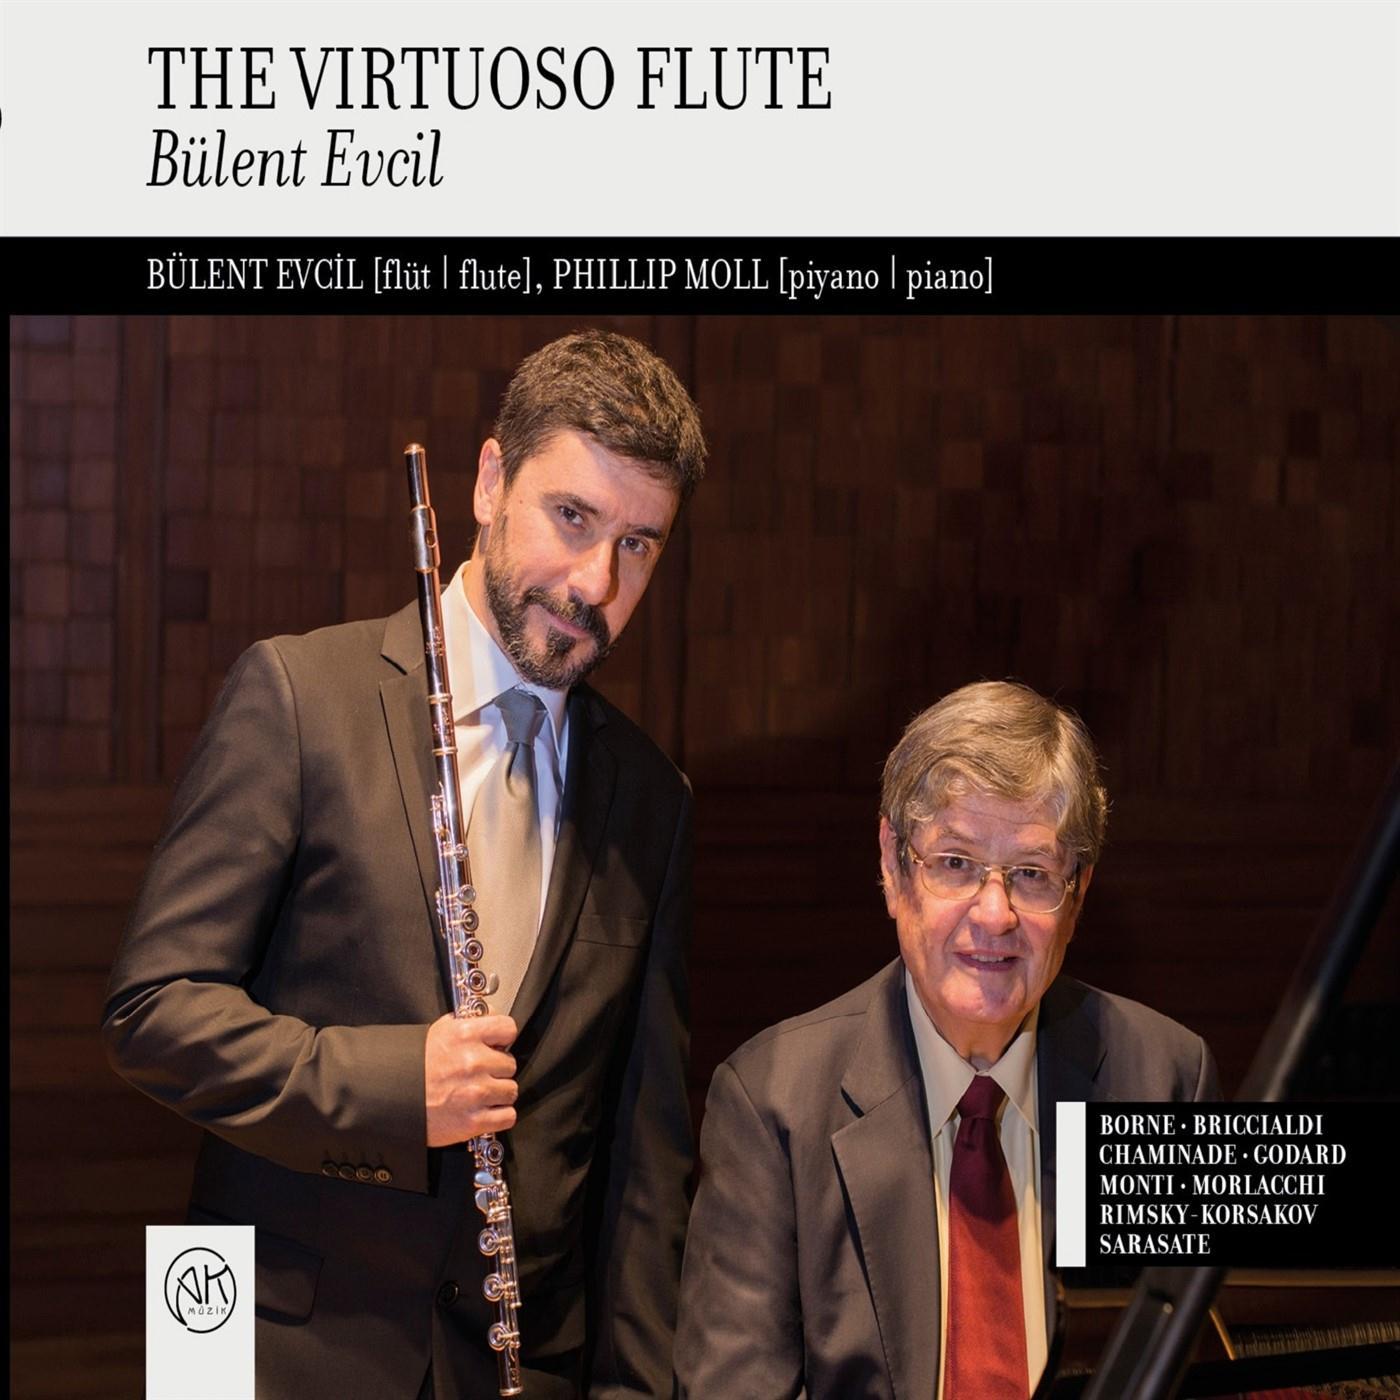 The Virtuoso Flute